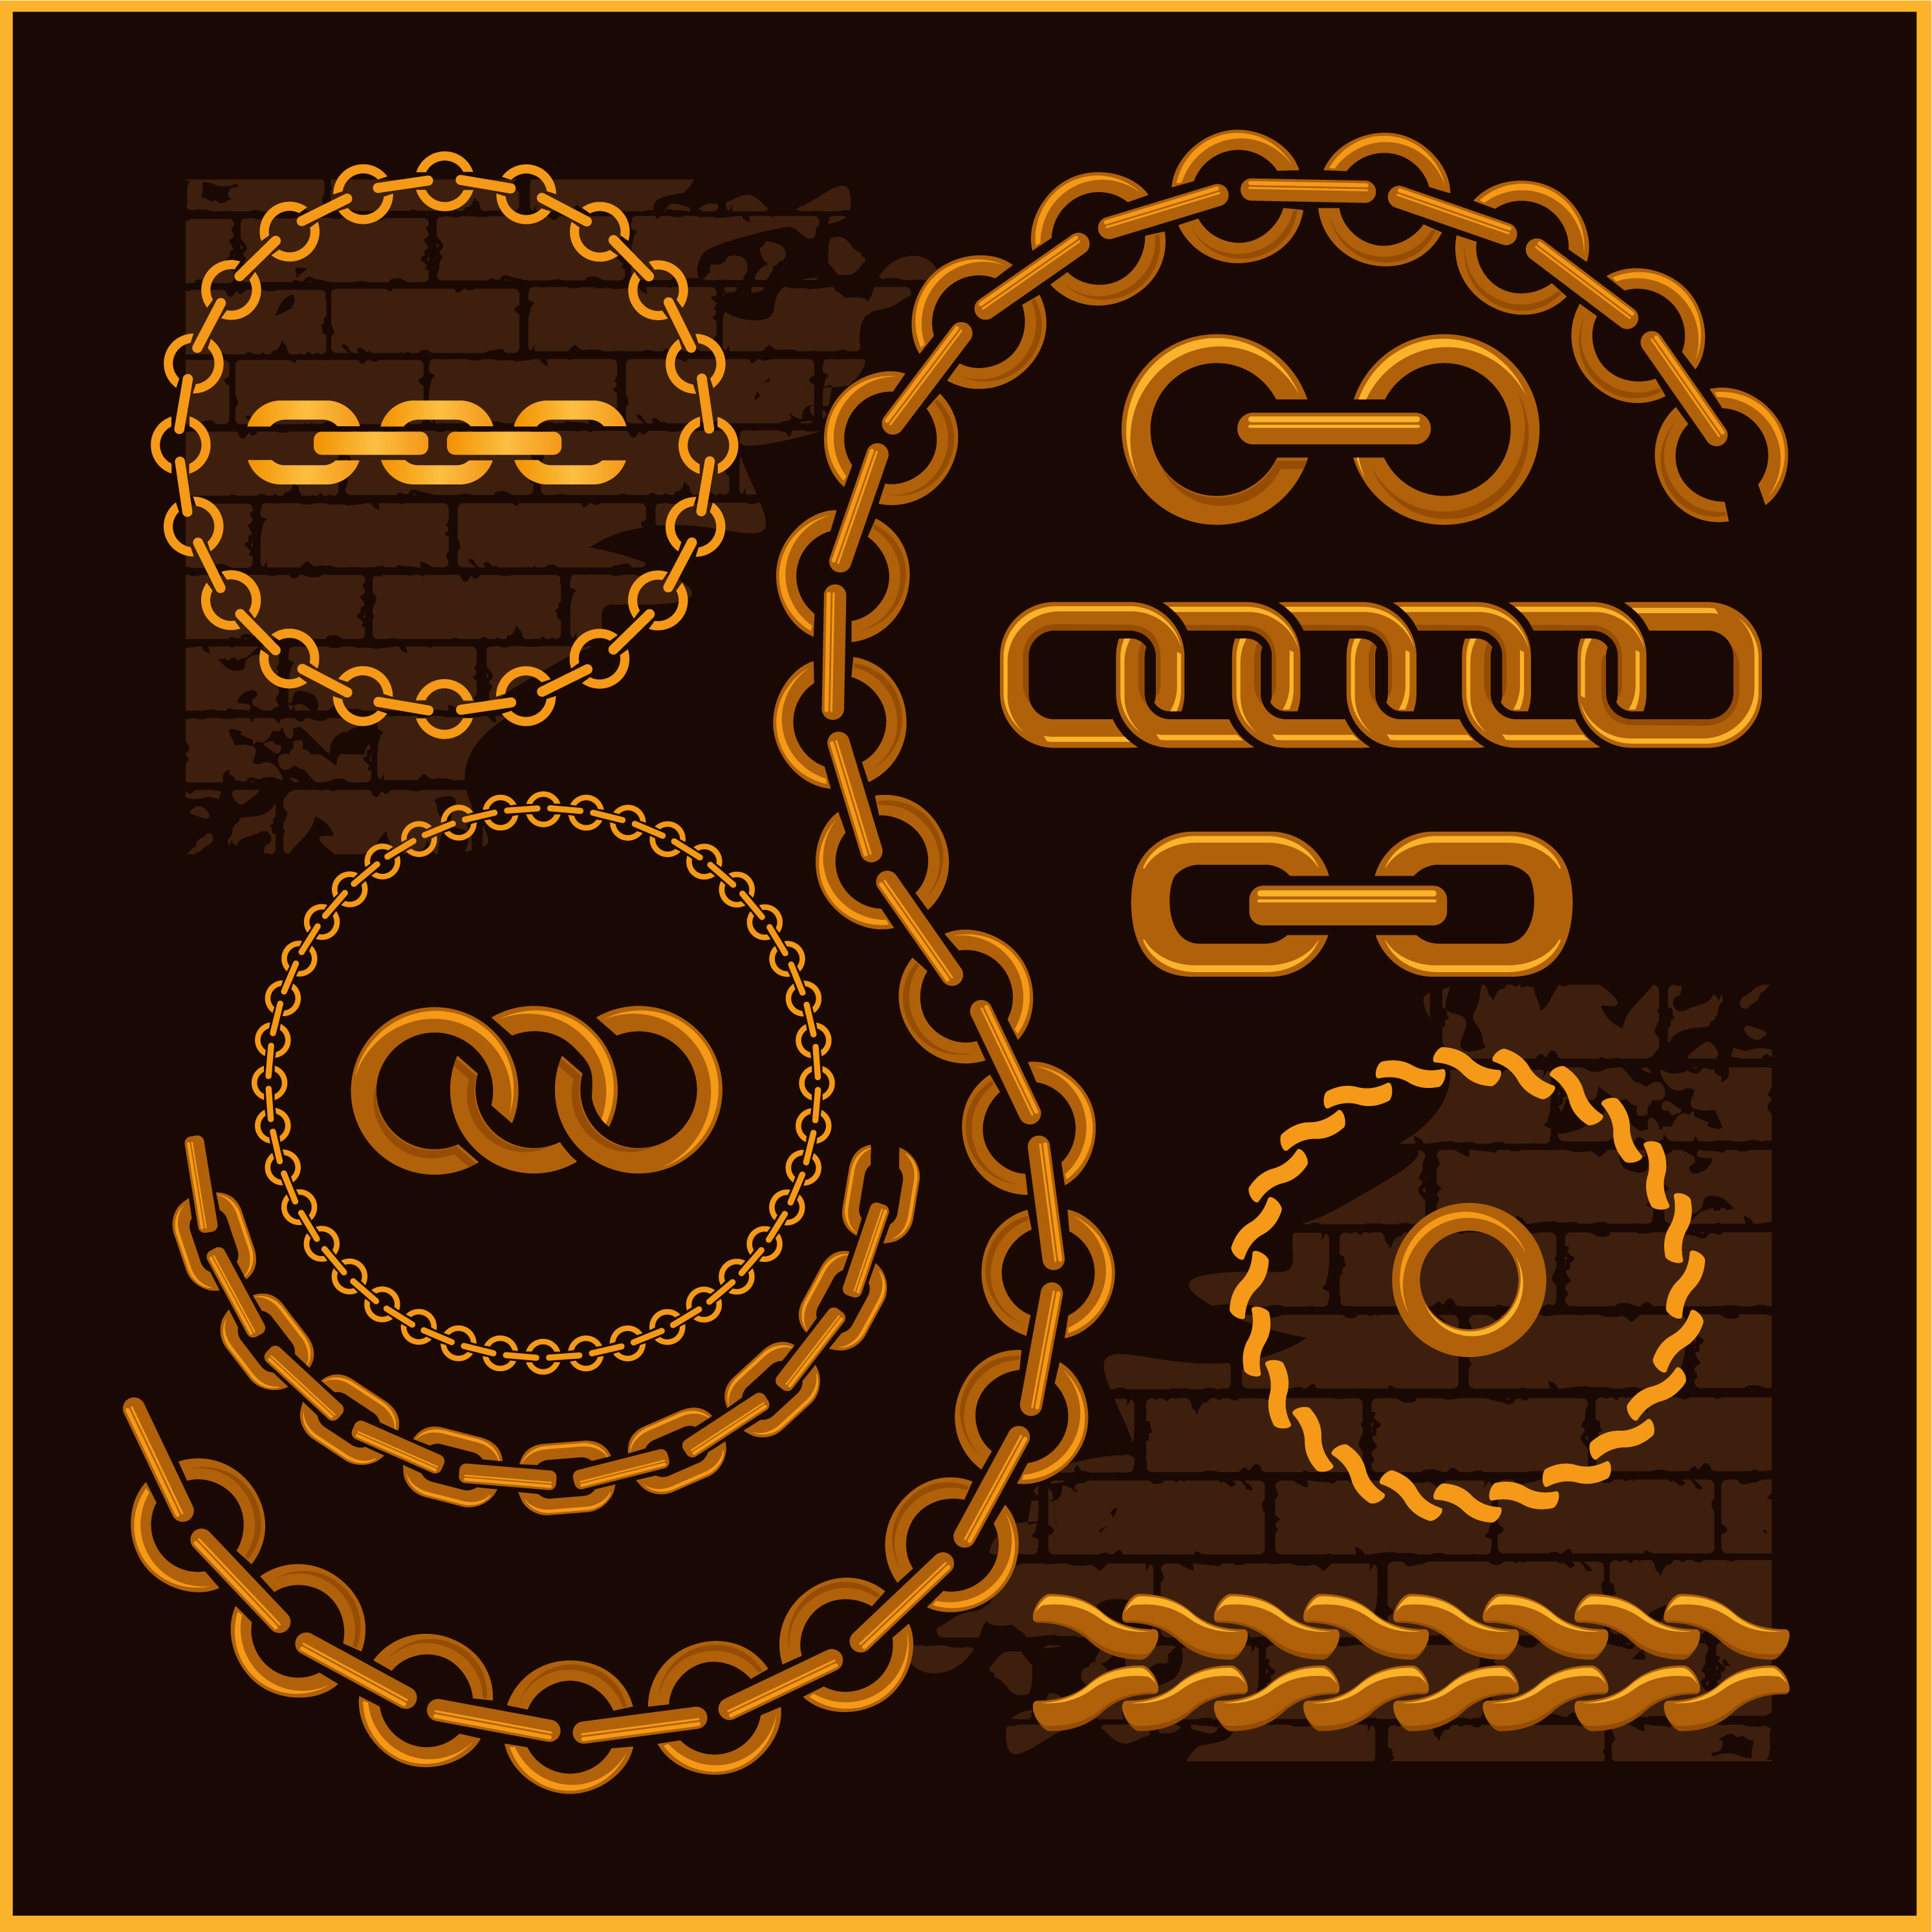 chain illustration free download